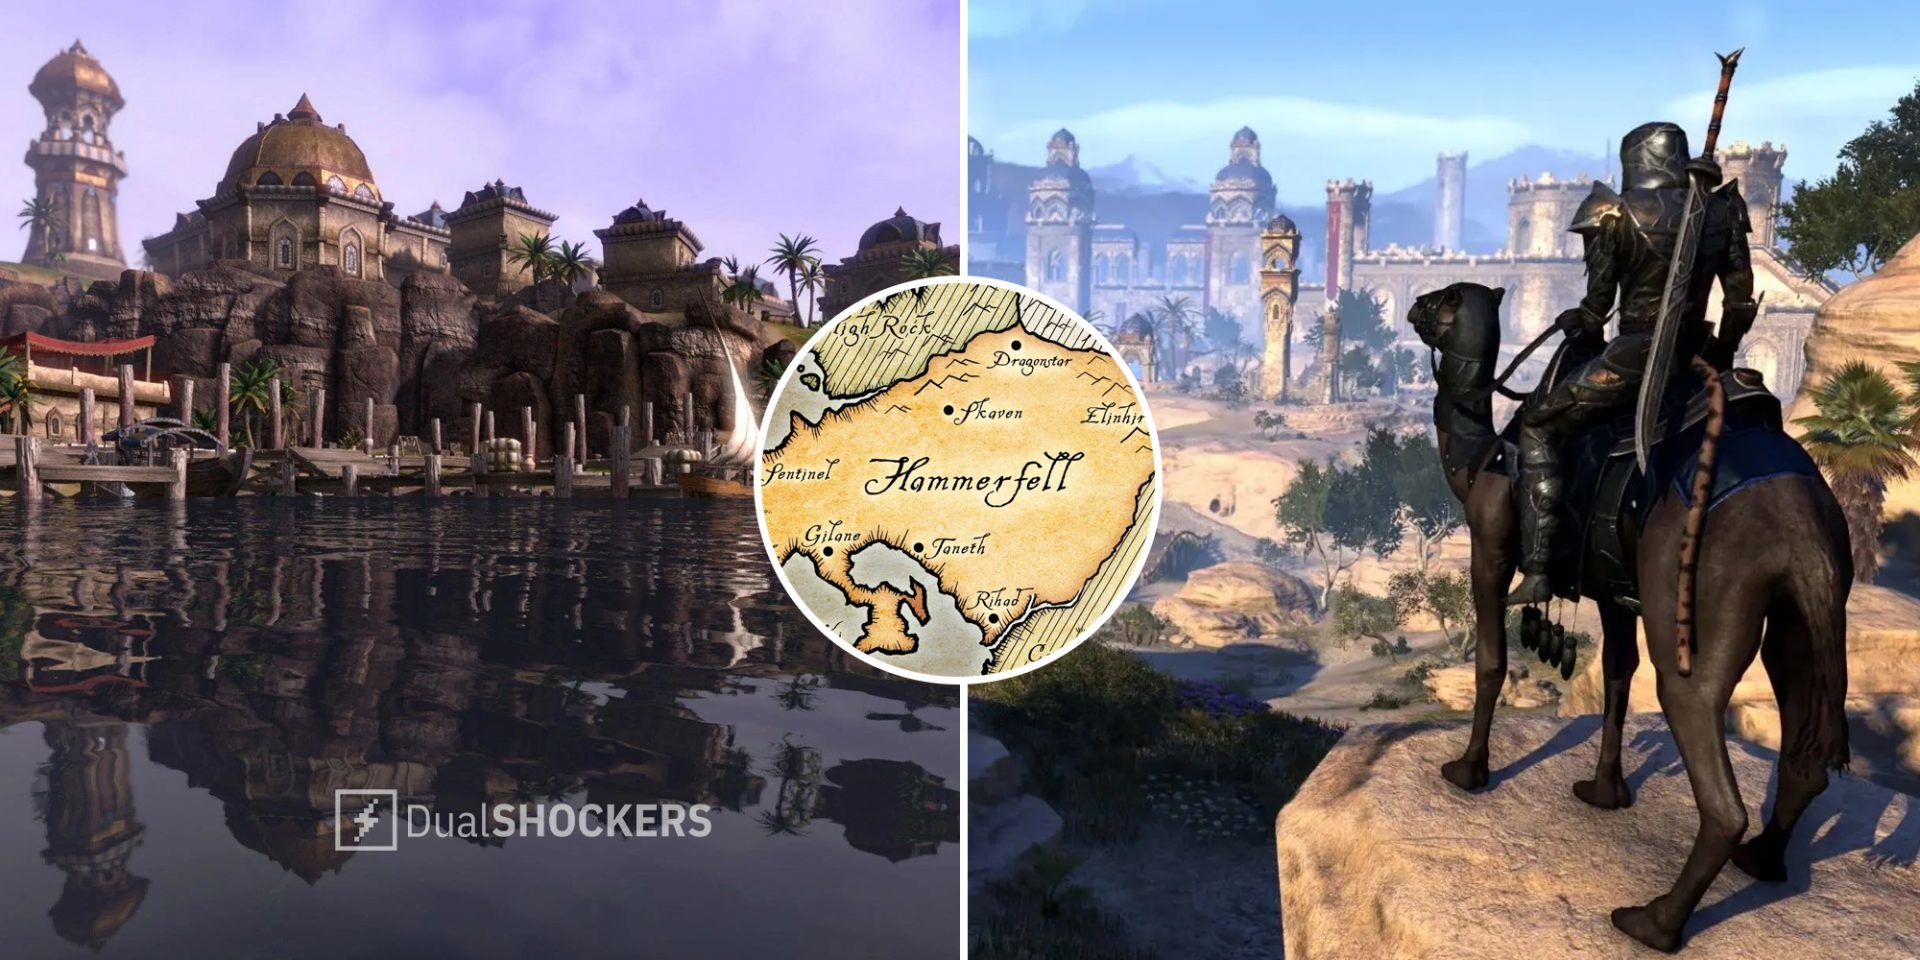 Elder Scrolls Hammerfell Sentinel docks on left, Hammerfell map in middle, player overlooking Hammerfell on right